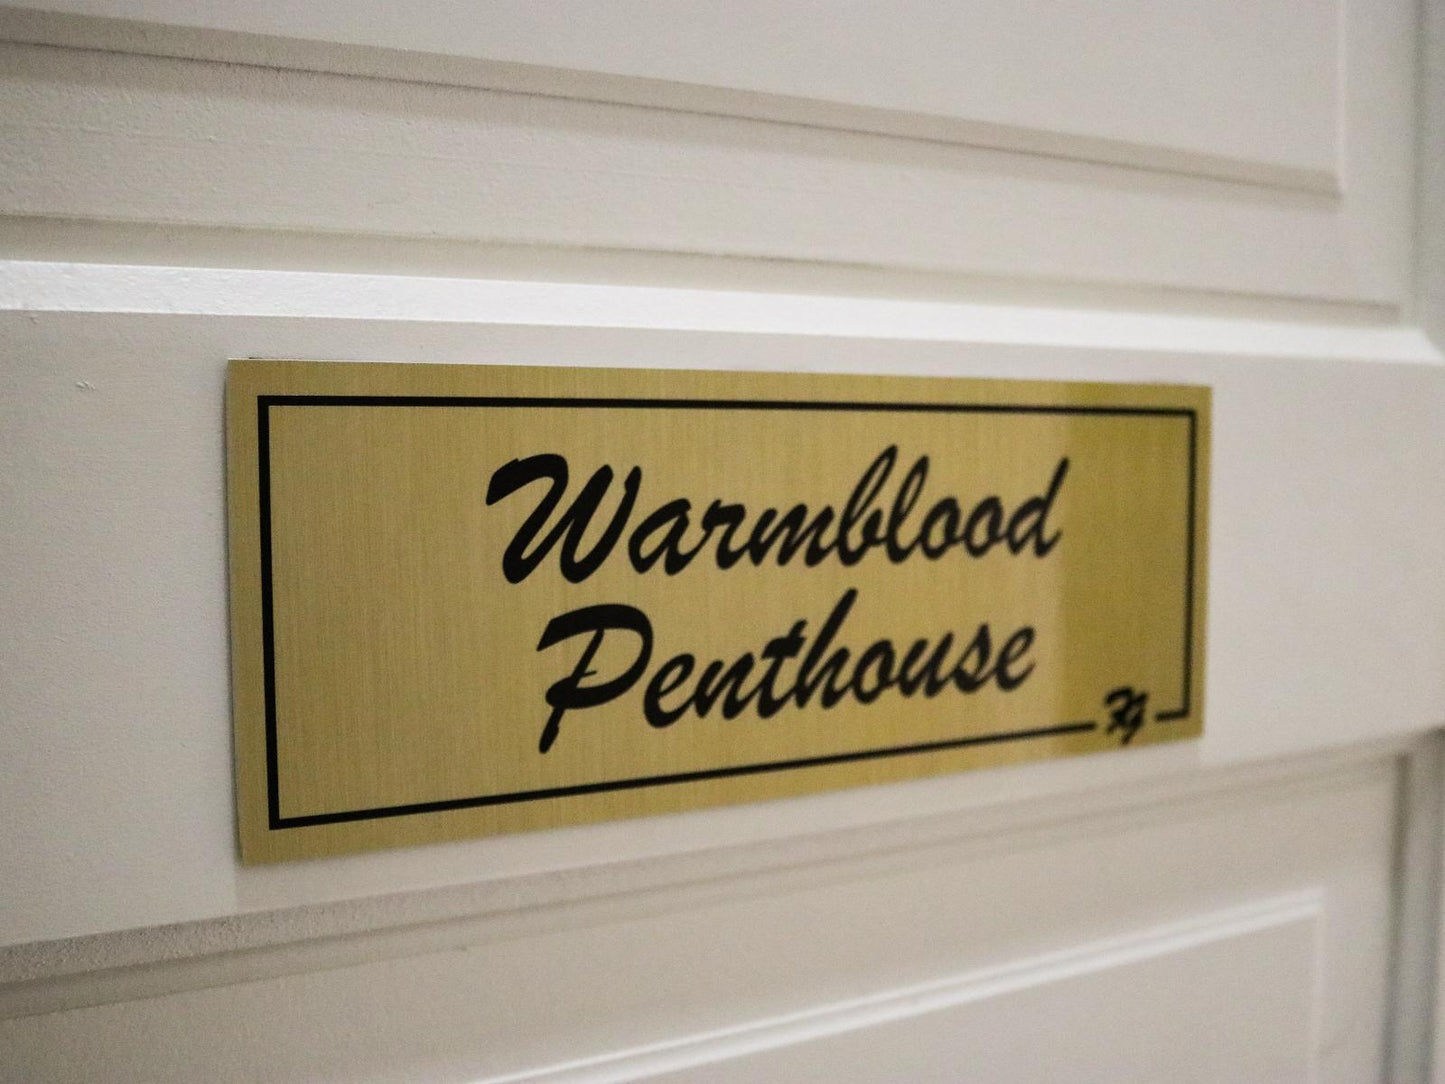 Warmblood Penthouse @ Fair Glen